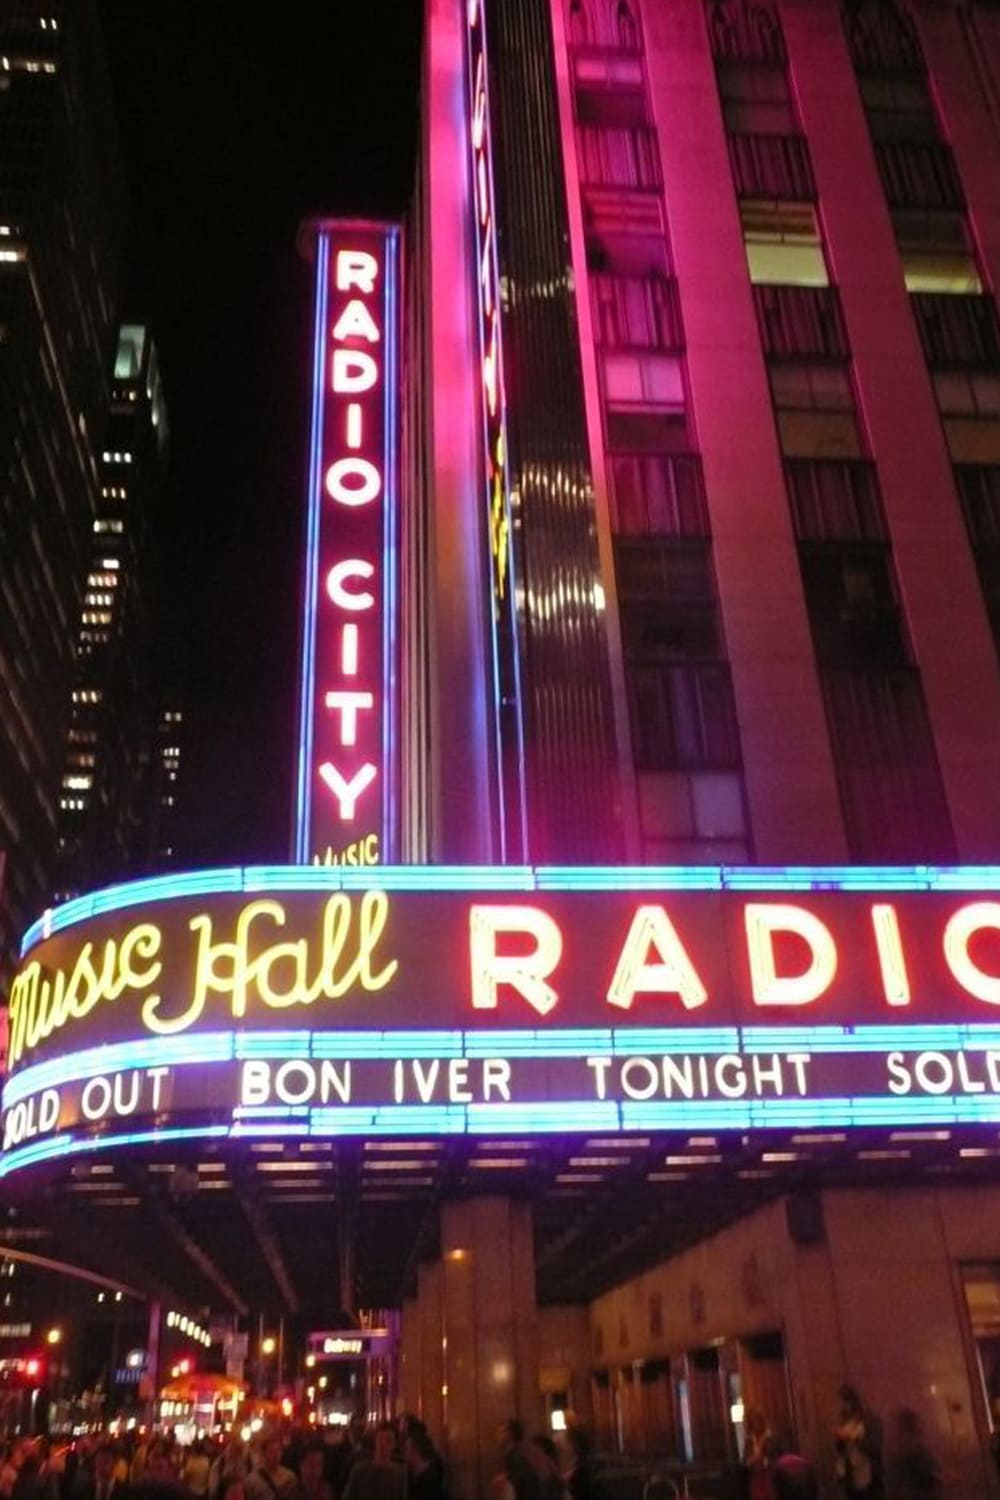 Bon Iver Live From Radio City